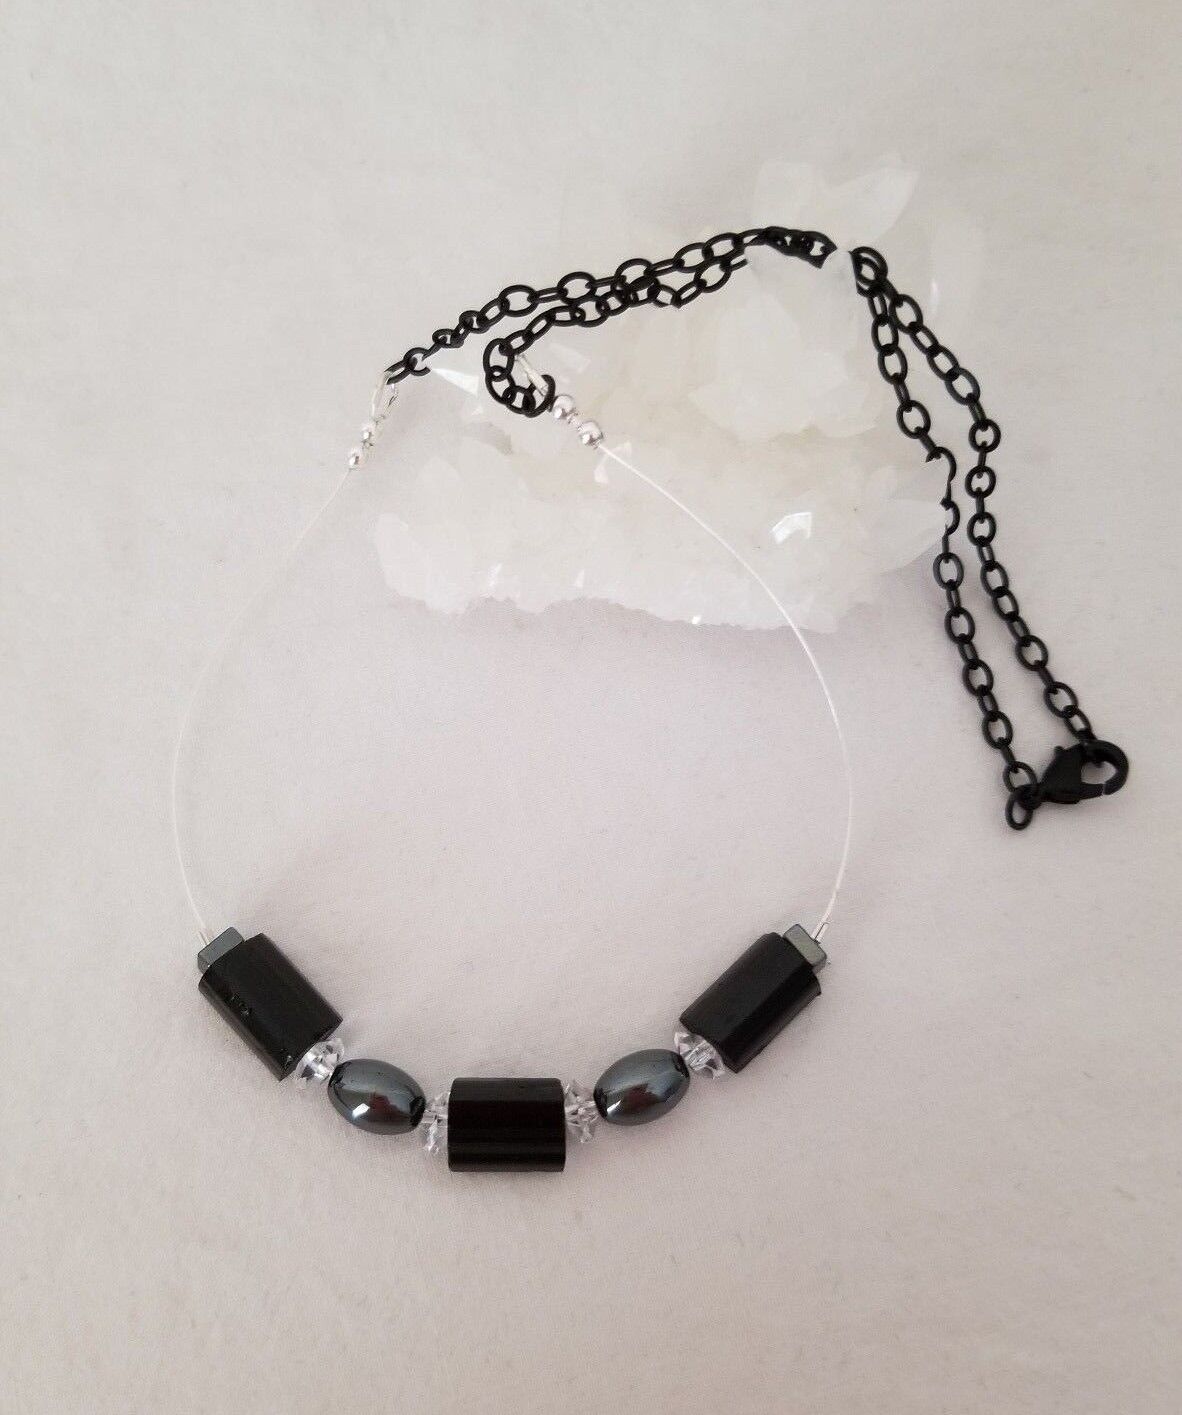 Black Tourmaline Rough, Hematite, Rock Crystal Quartz - Wire And Chain Necklace